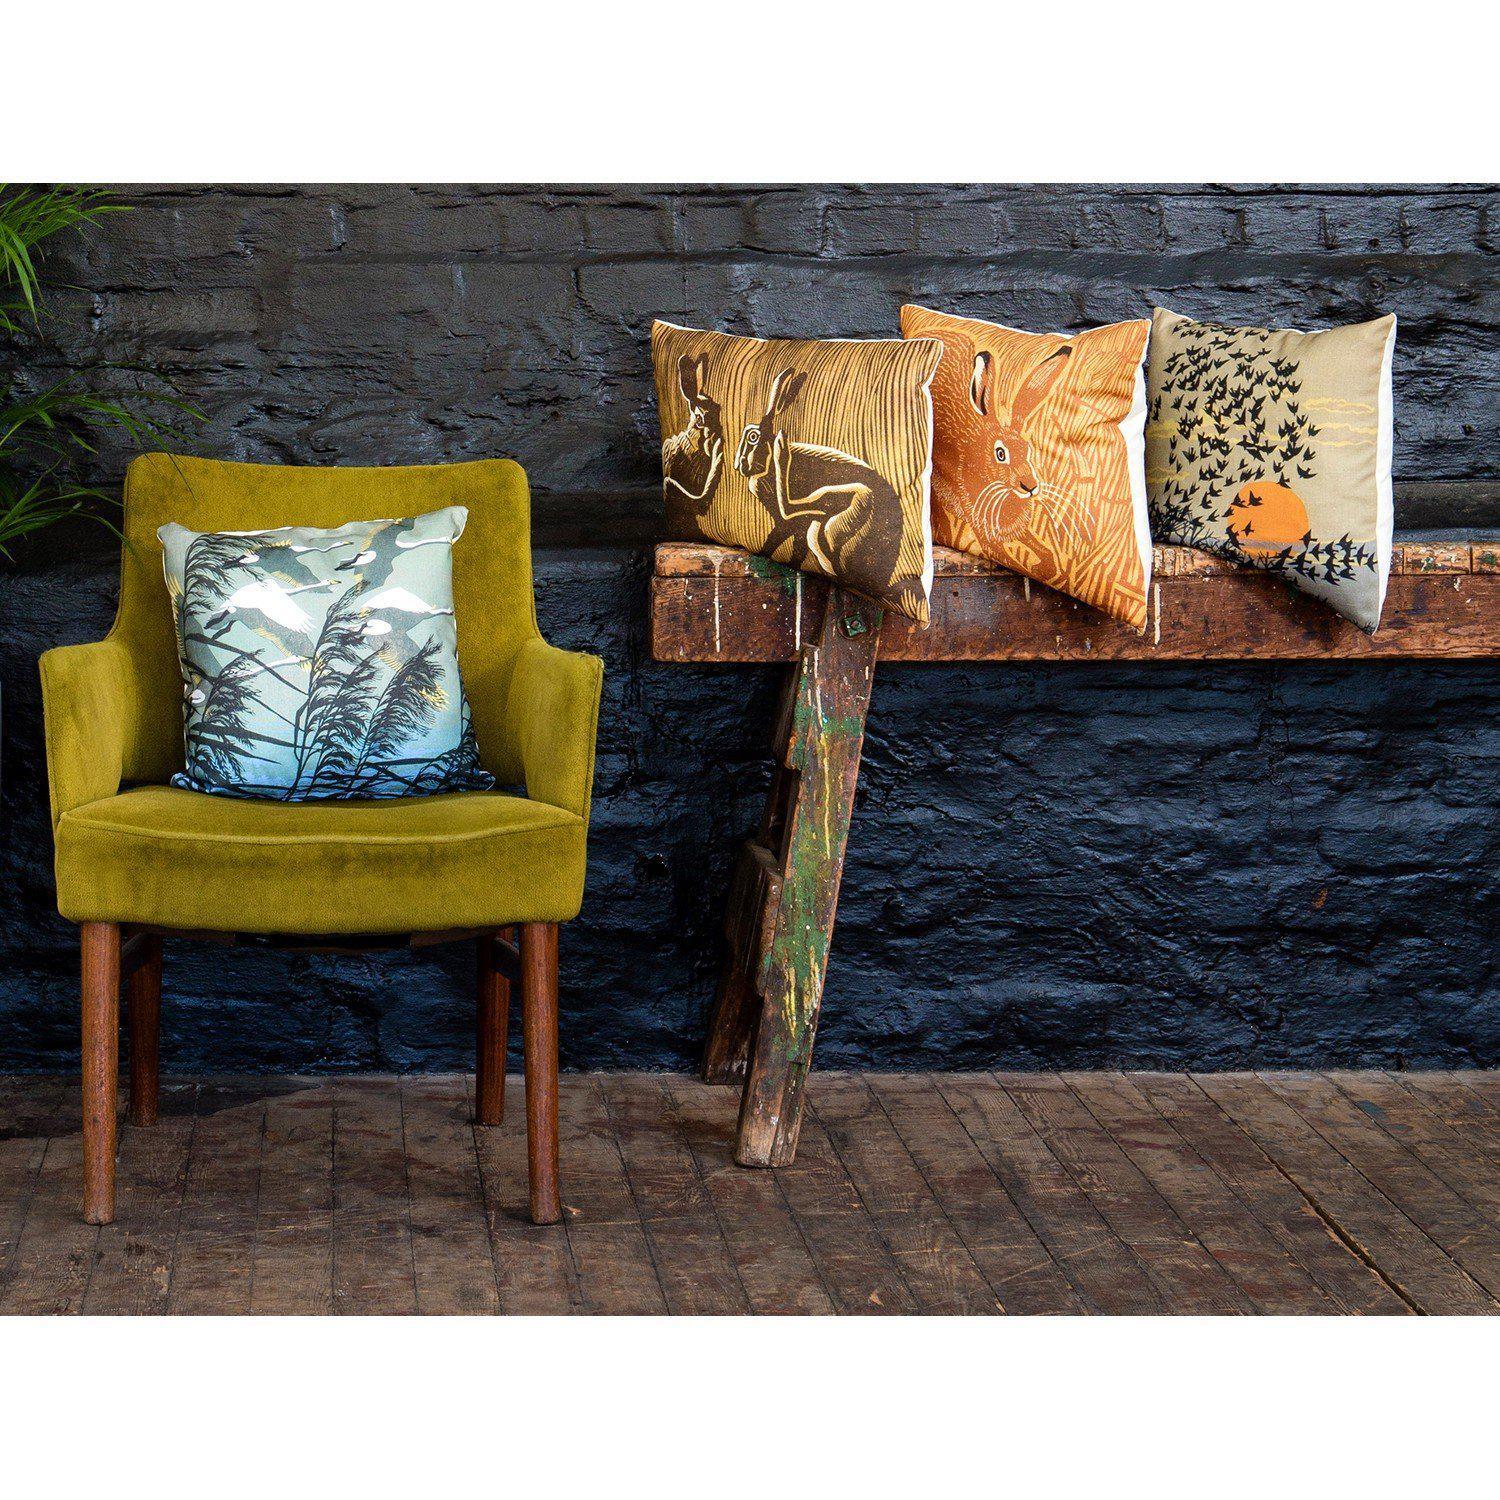 Five Puffins - Robert Gillmor Cushion - Handmade Cushions UK - WeLoveCushions